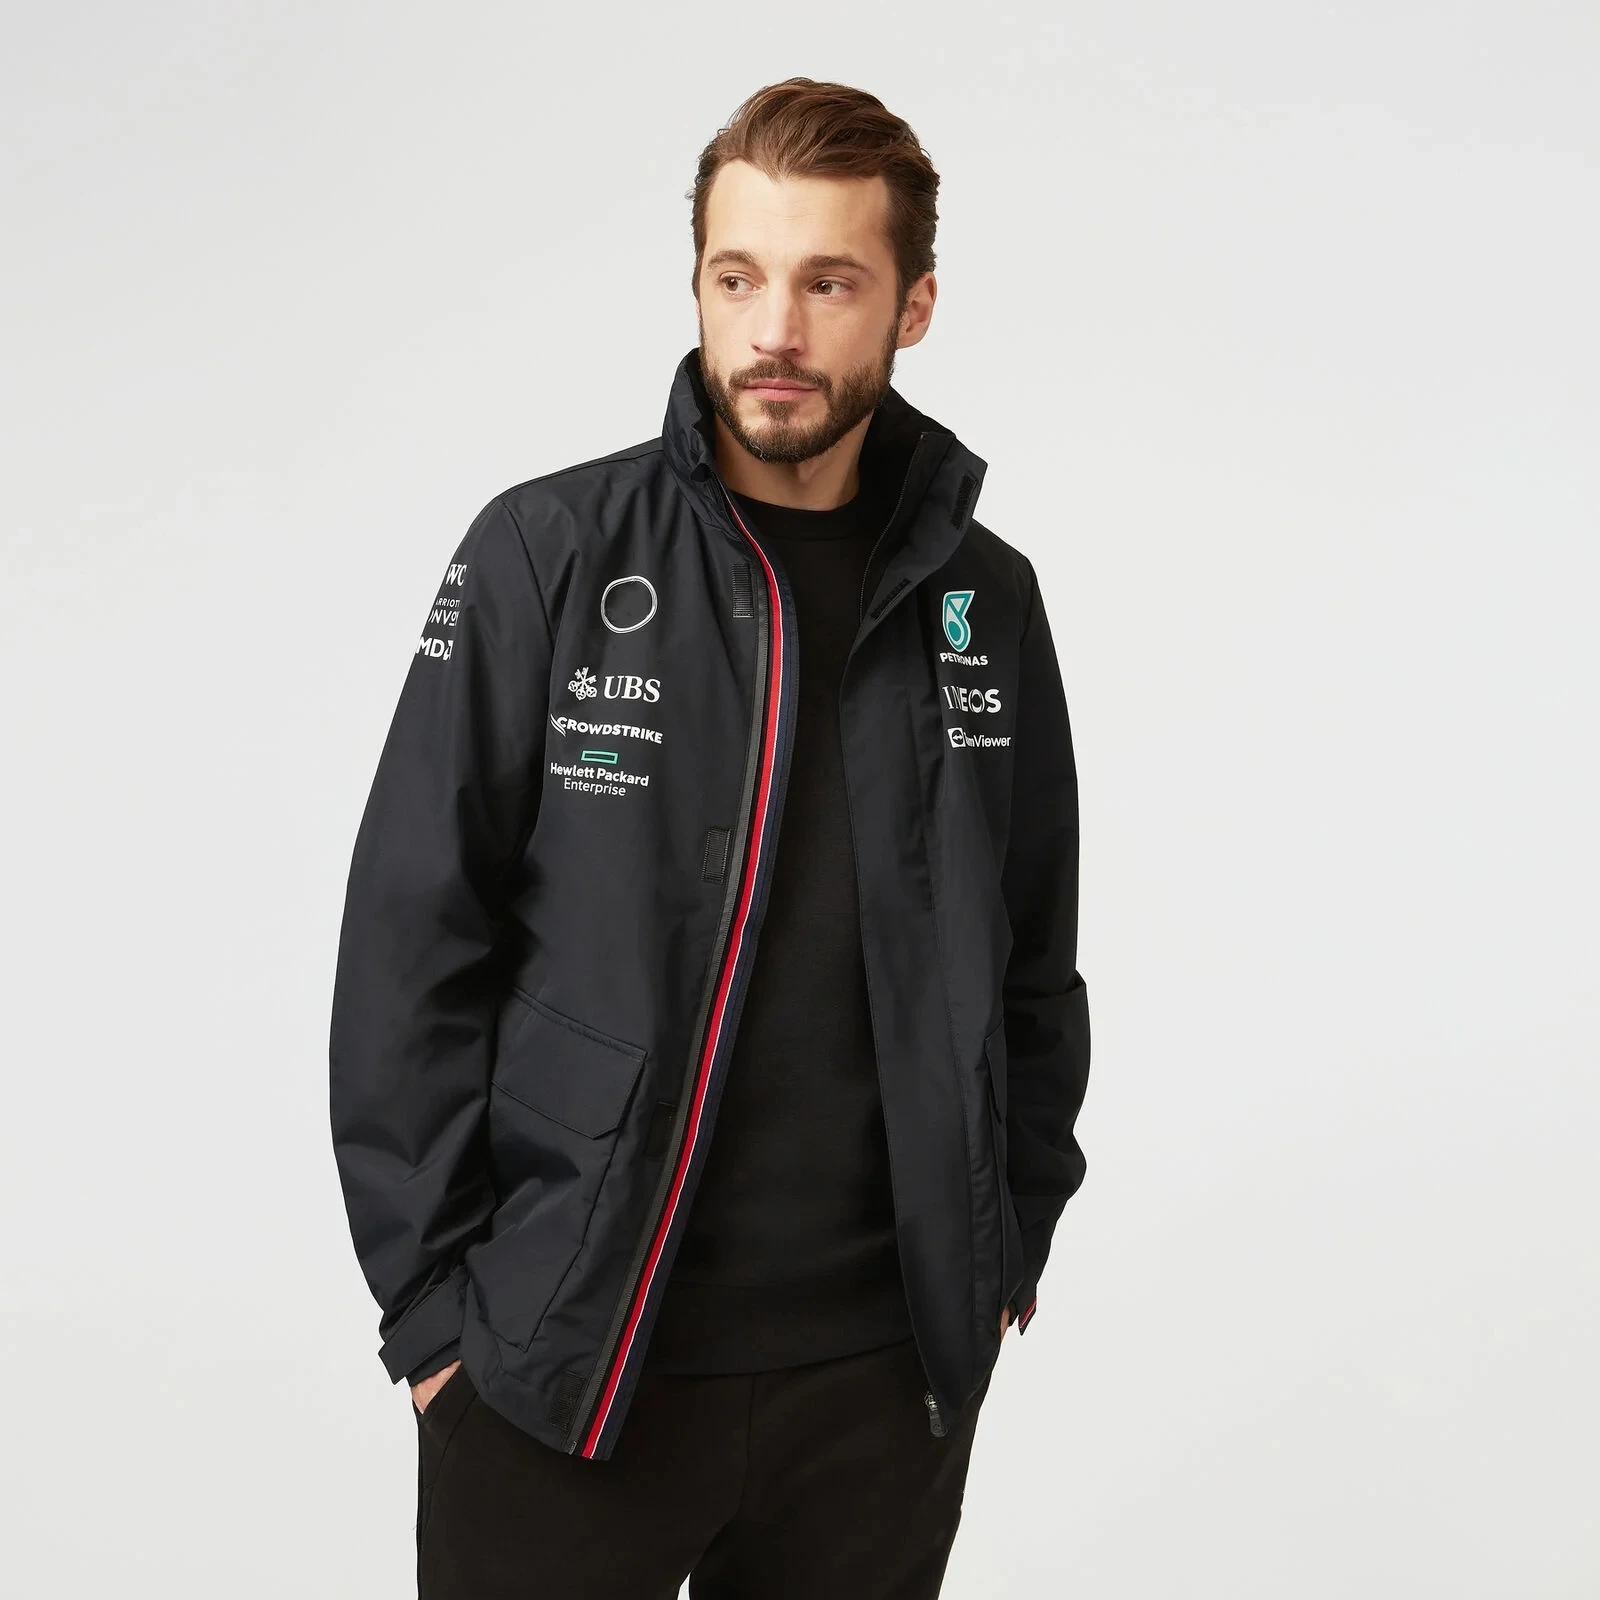 Новинка 2022, куртка от дождя для команды Петронас, F1 гоночная Мужская куртка, рубашка для команды формулы 1, последняя модель 2022-2020 F1, куртка дл...